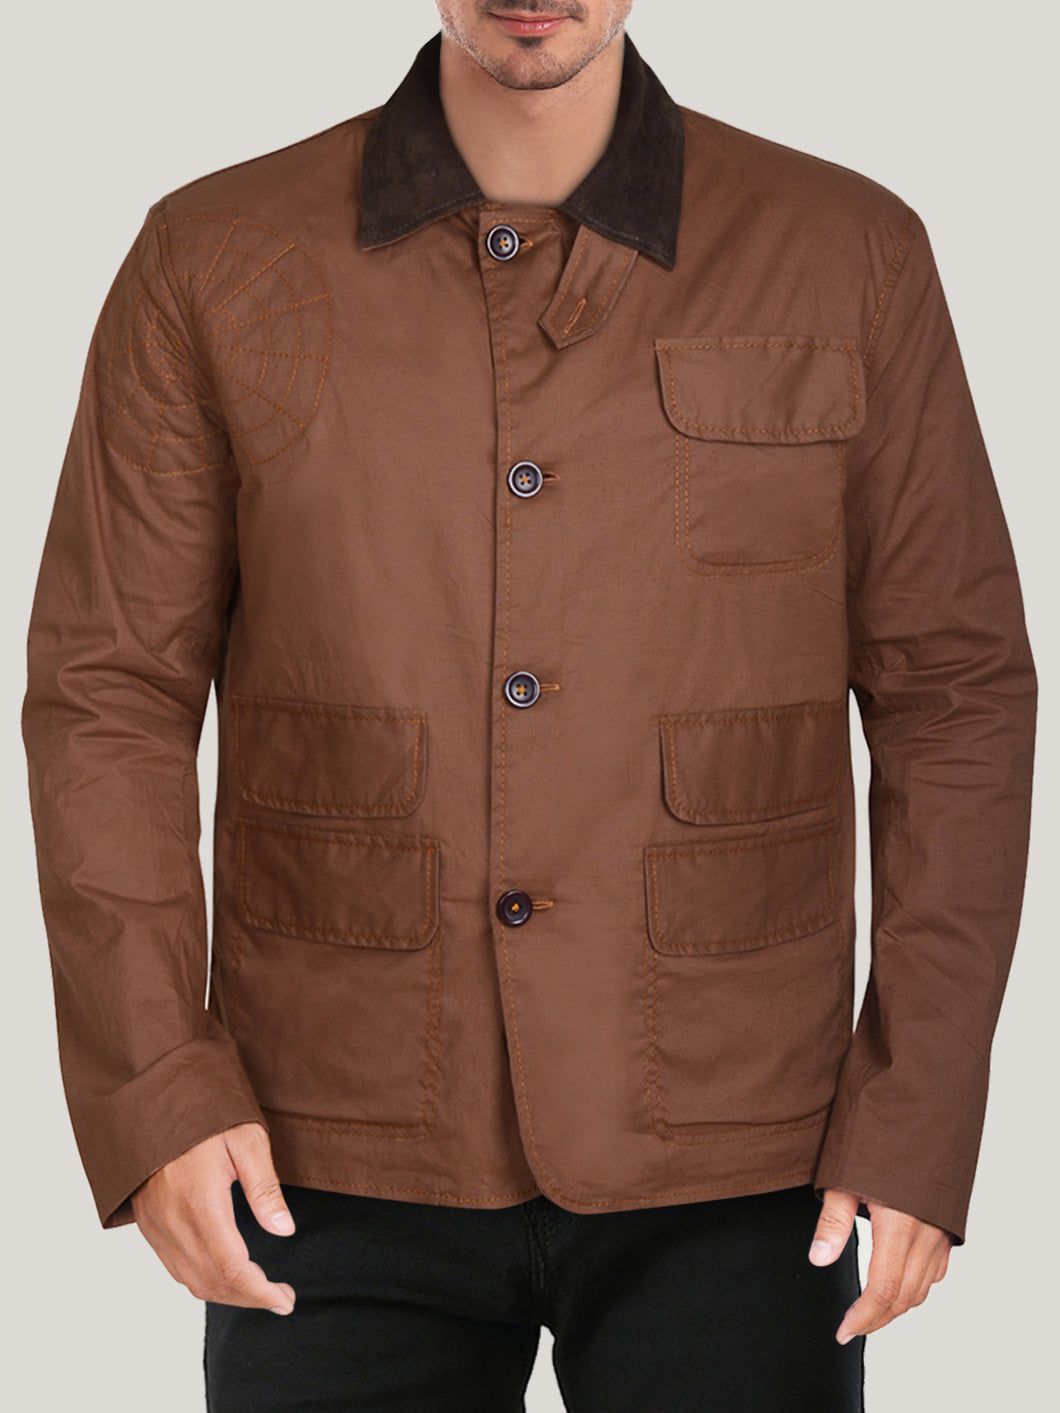 Men's Exquisite Brown Cotton Light Jacket